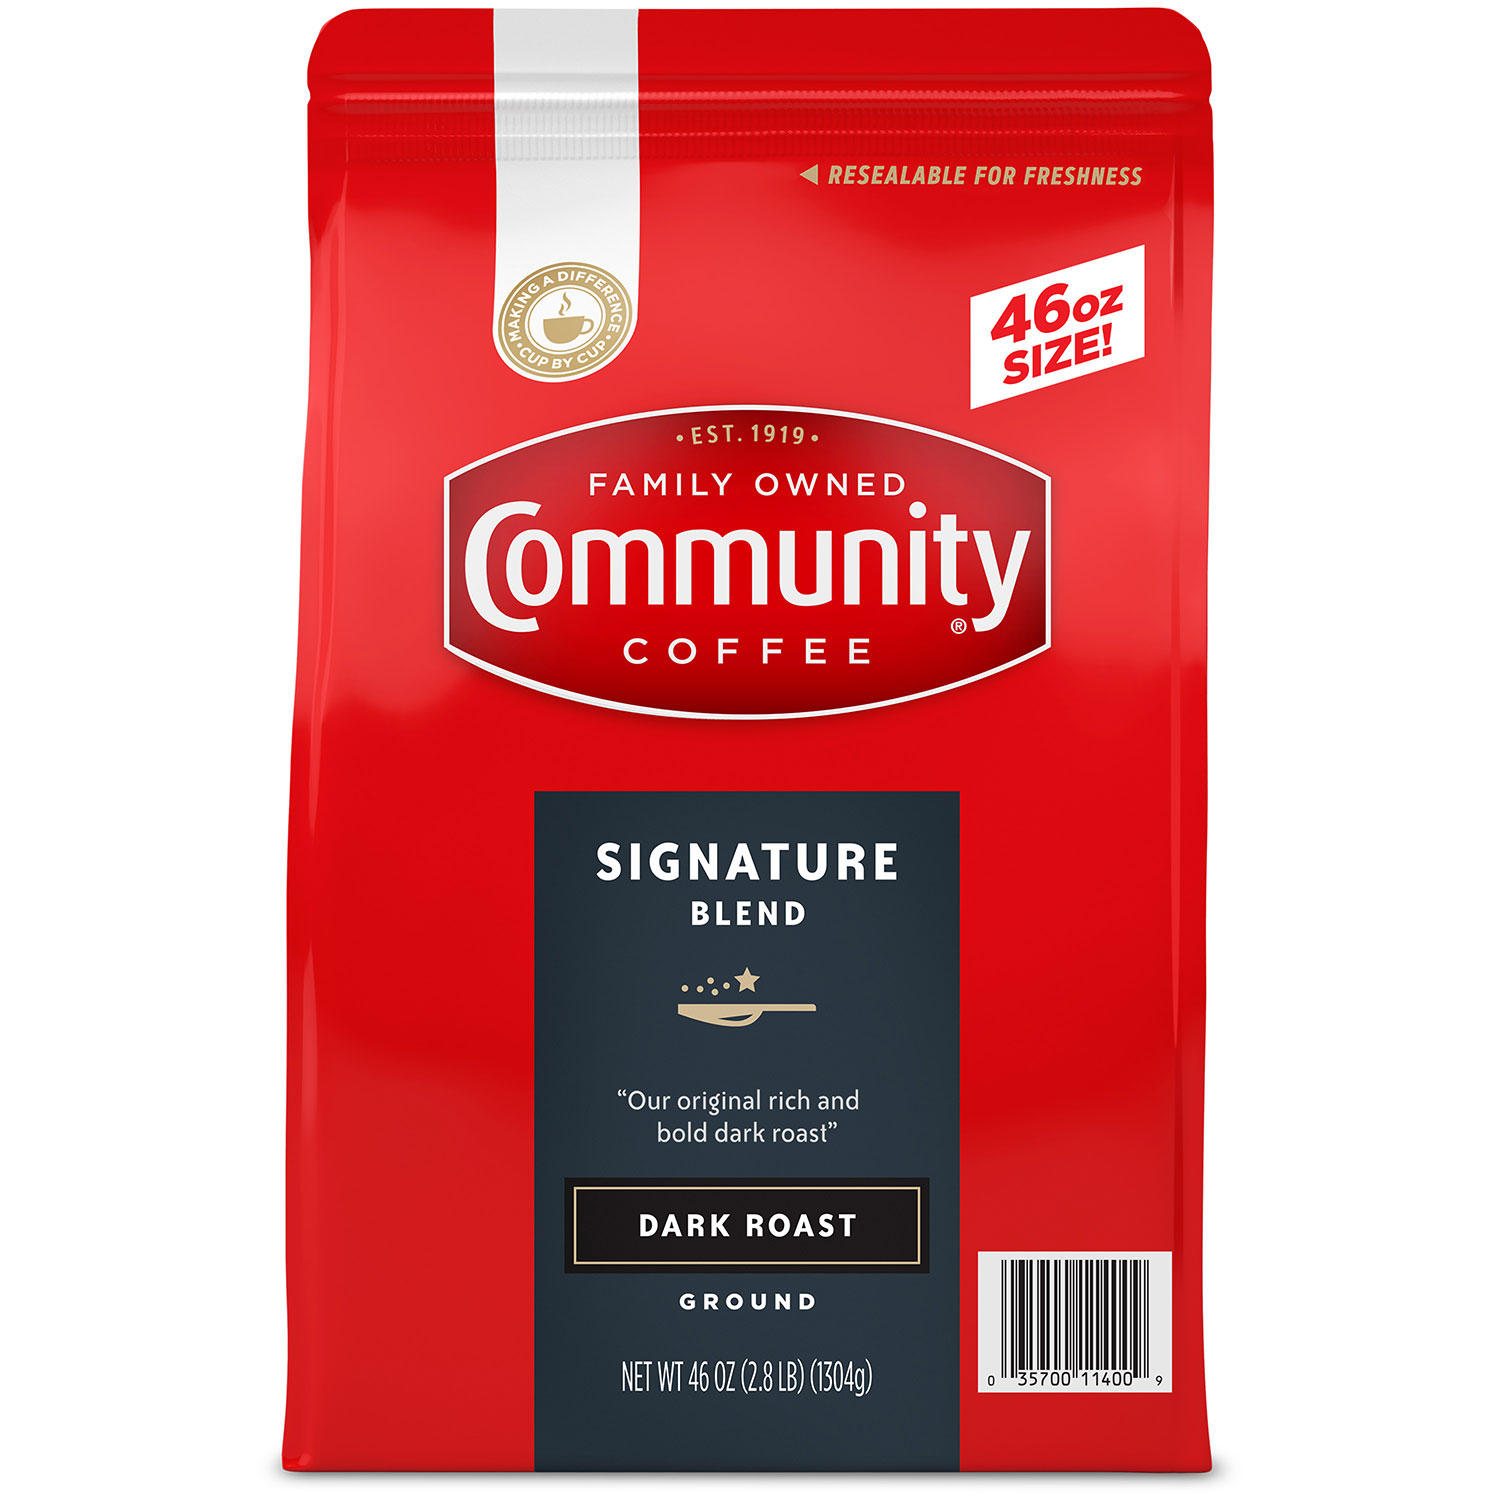 Community Coffee Ground Dark Roast Signature Blend (46 oz.)